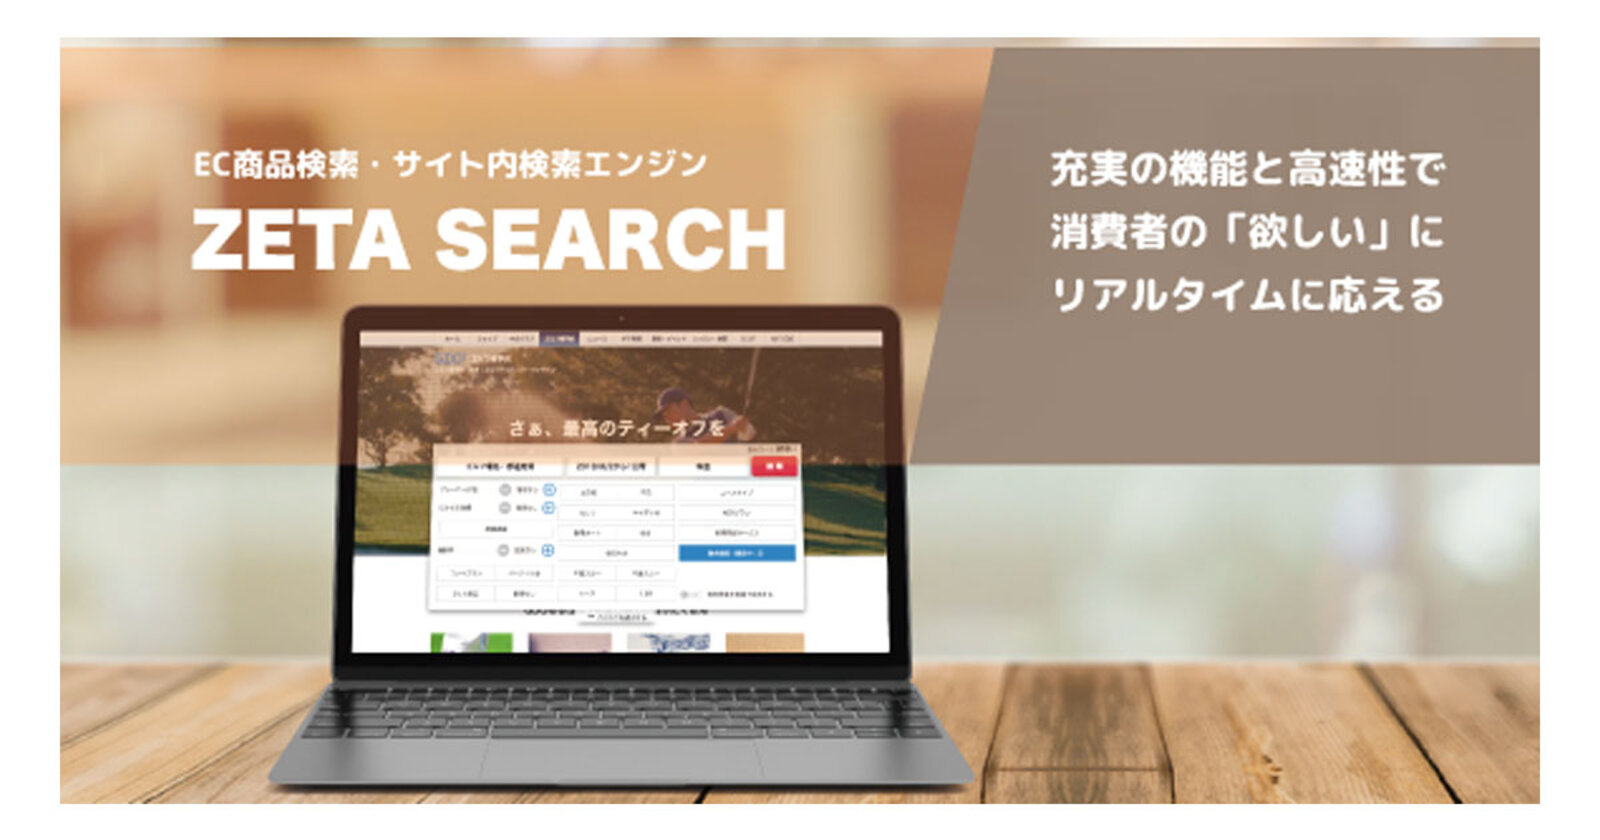 Ec商品検索 サイト内検索エンジン Zeta Search 1年間に処理するクエリ数が約10億クエリを達成 ネットショップ担当者フォーラム